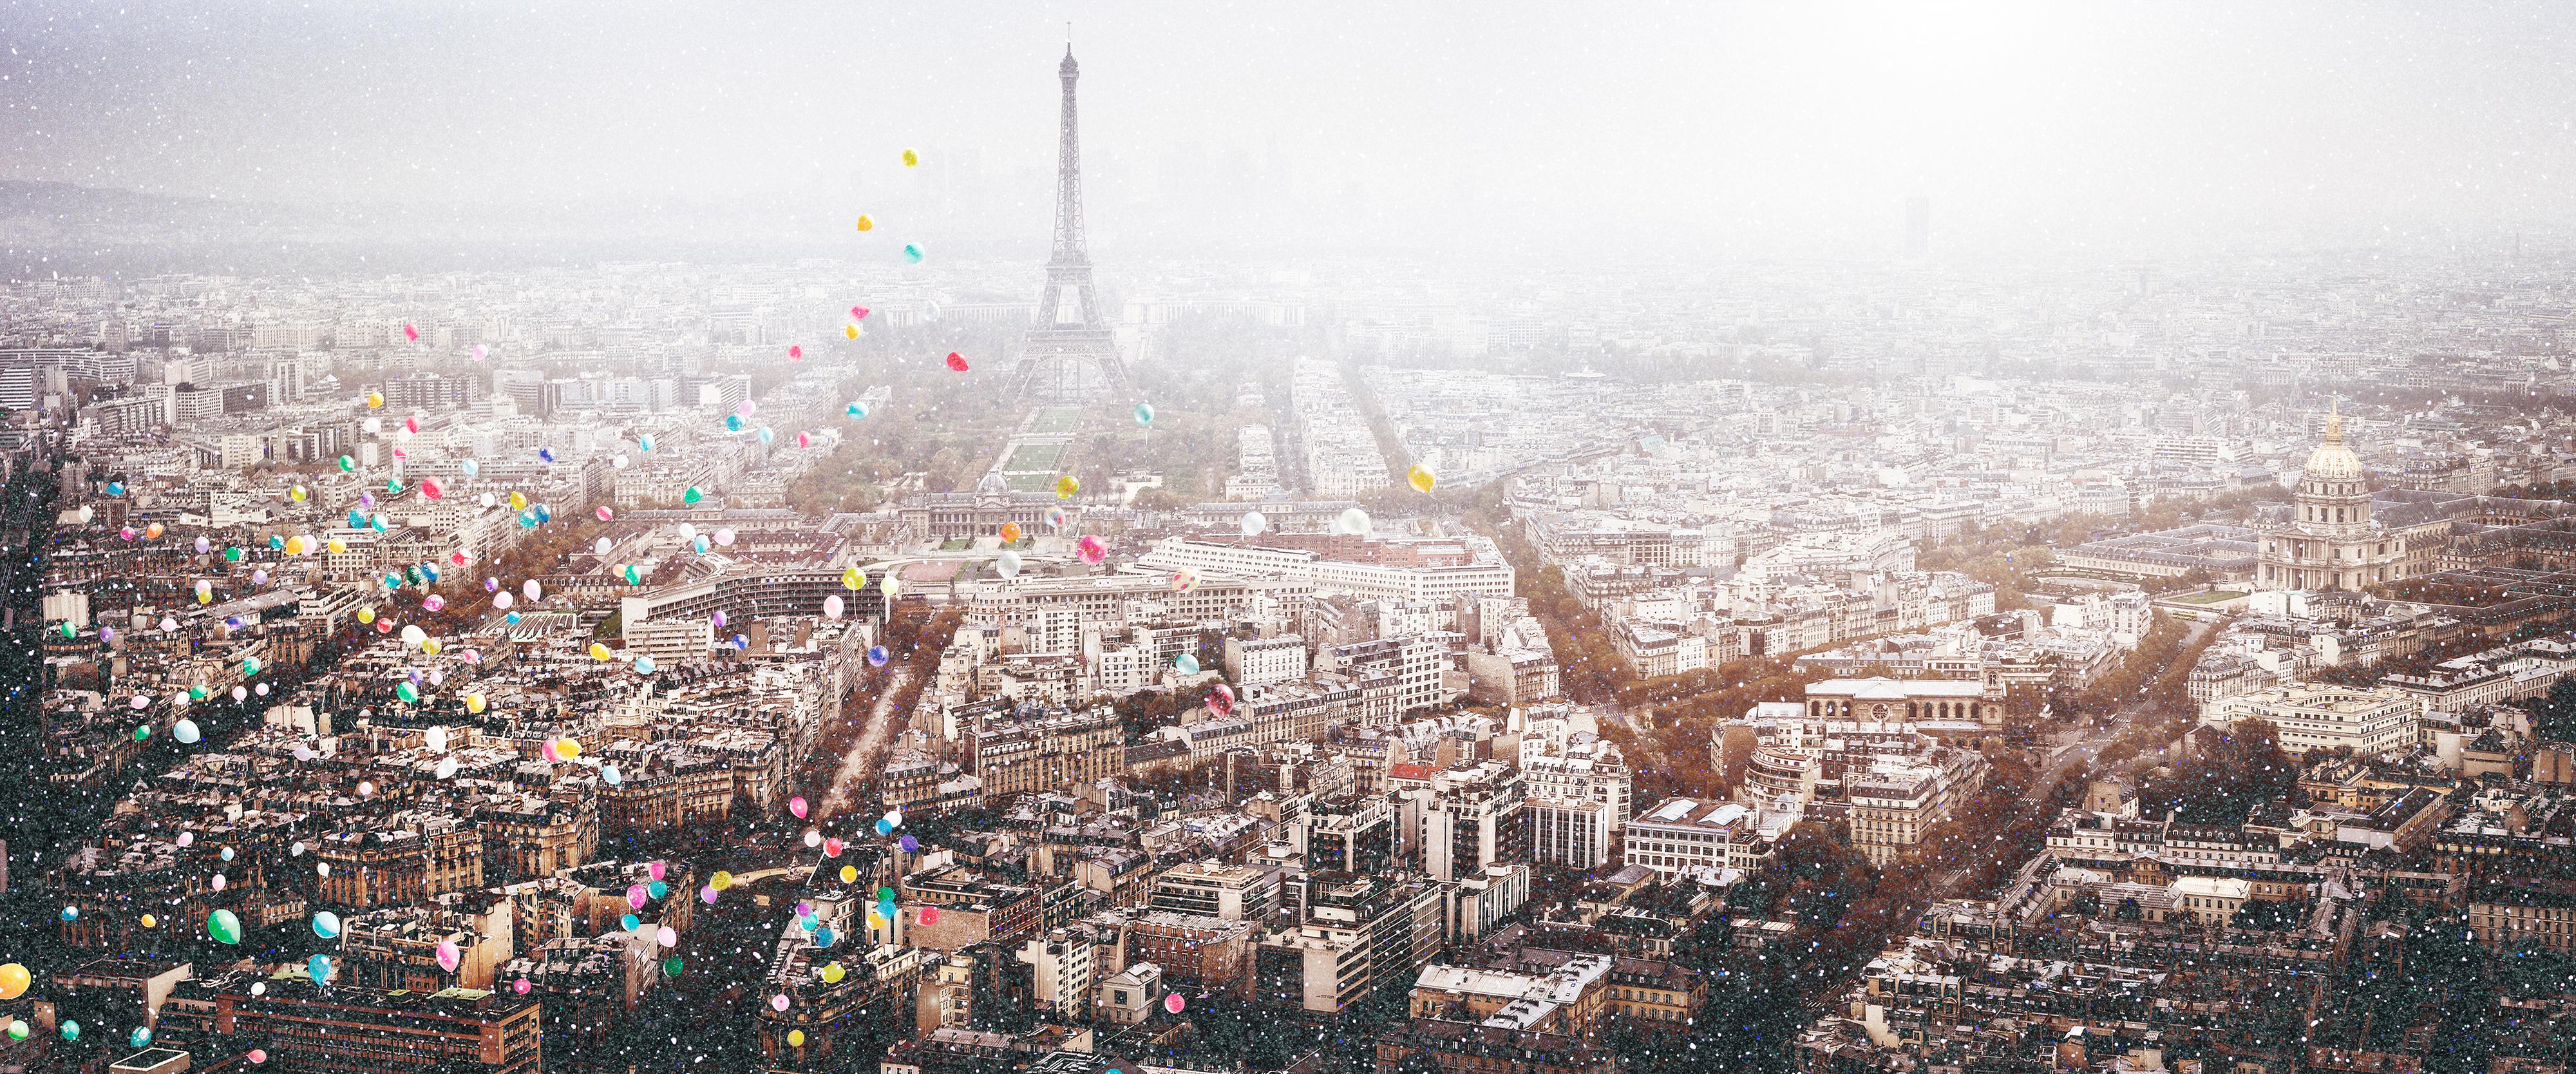 David Drebin Landscape Photograph - Balloons Over Paris Diamond Dust